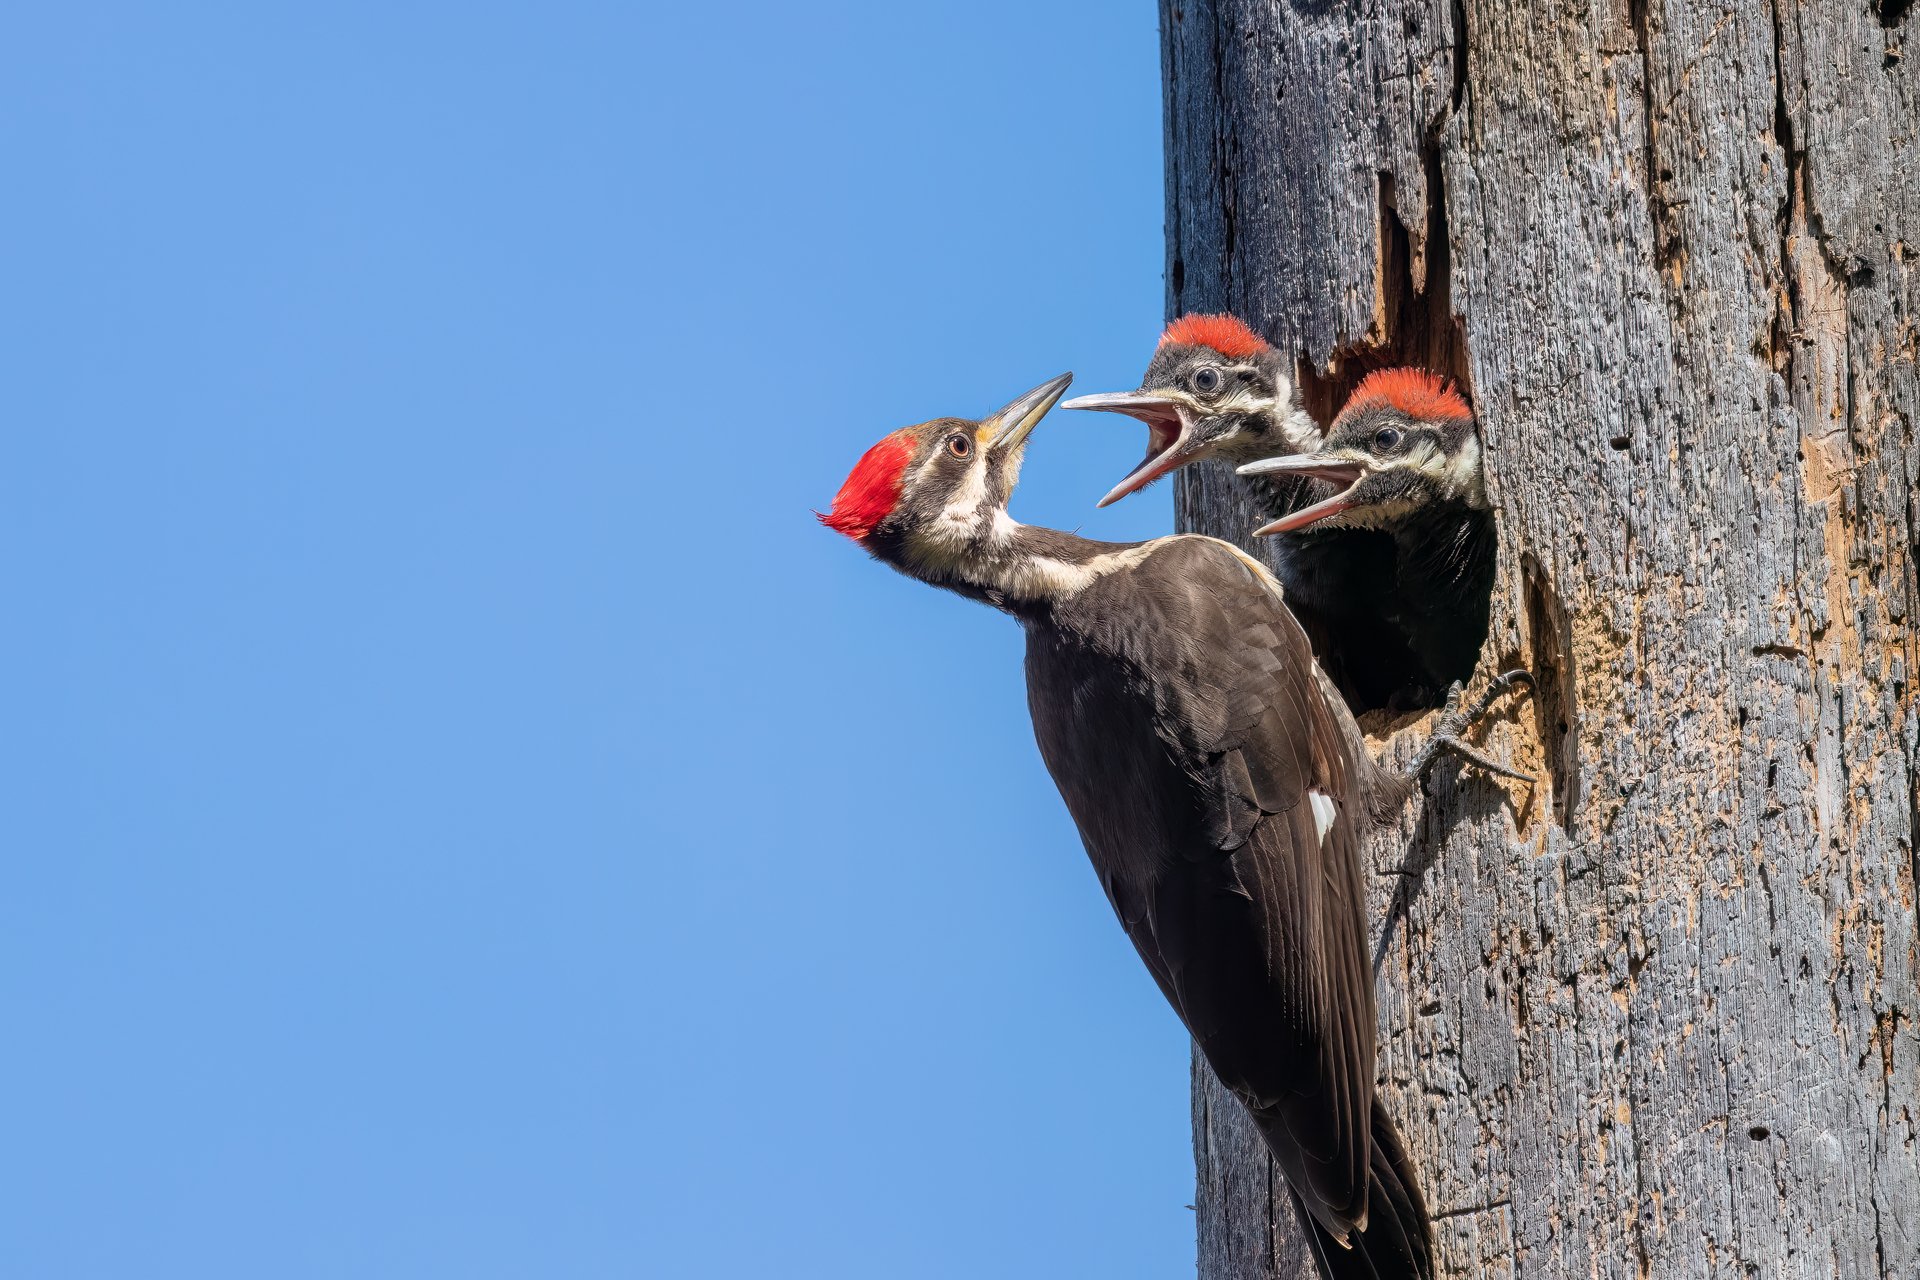 Pileated woodpecker bringing food to babies in tree